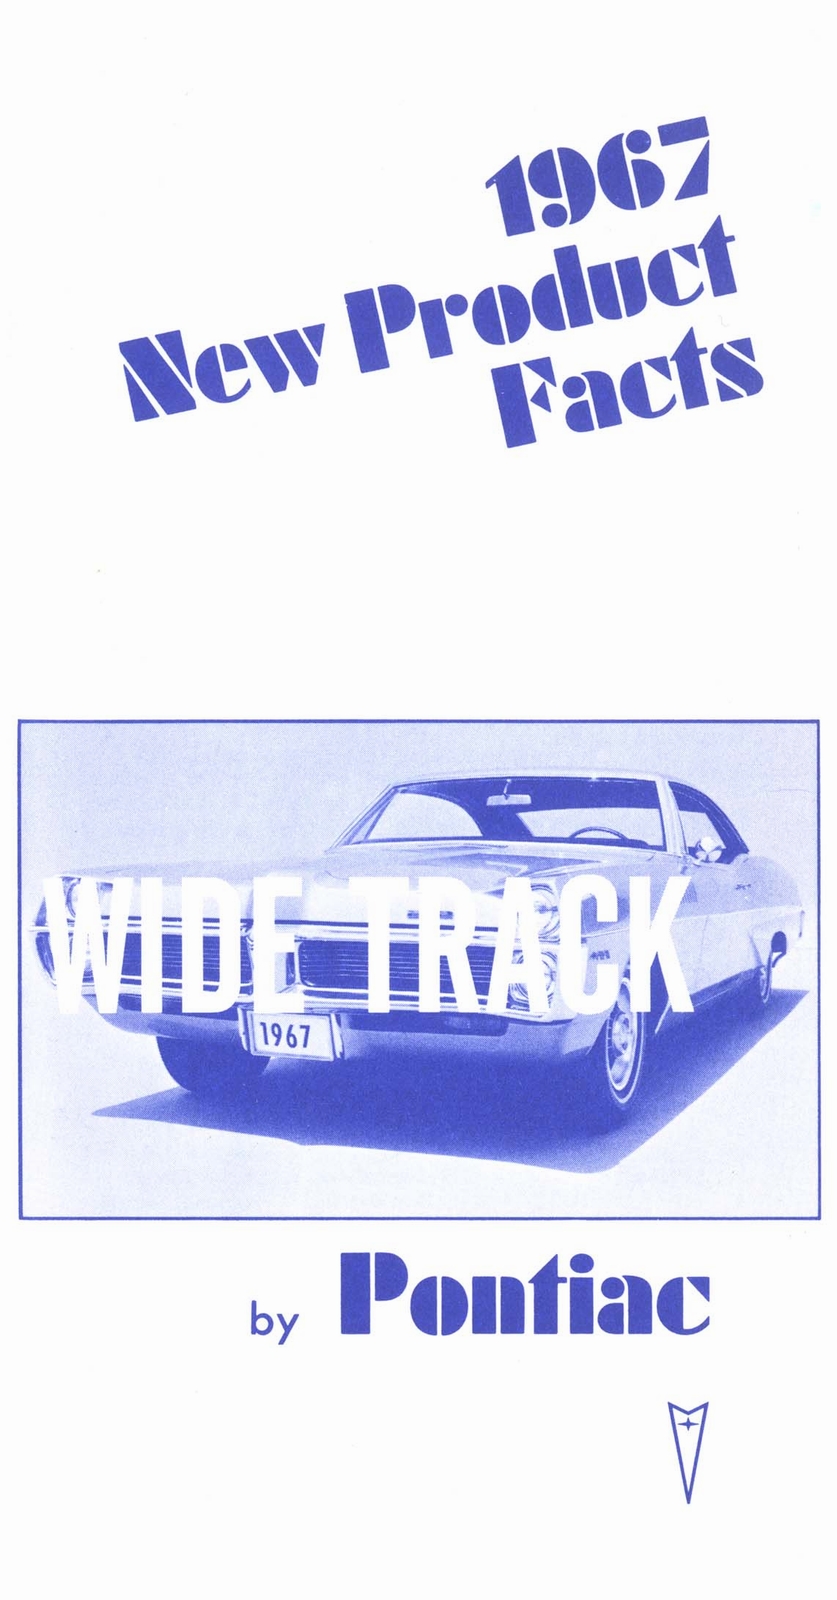 n_1967 Pontiac New Product Facts-00.jpg